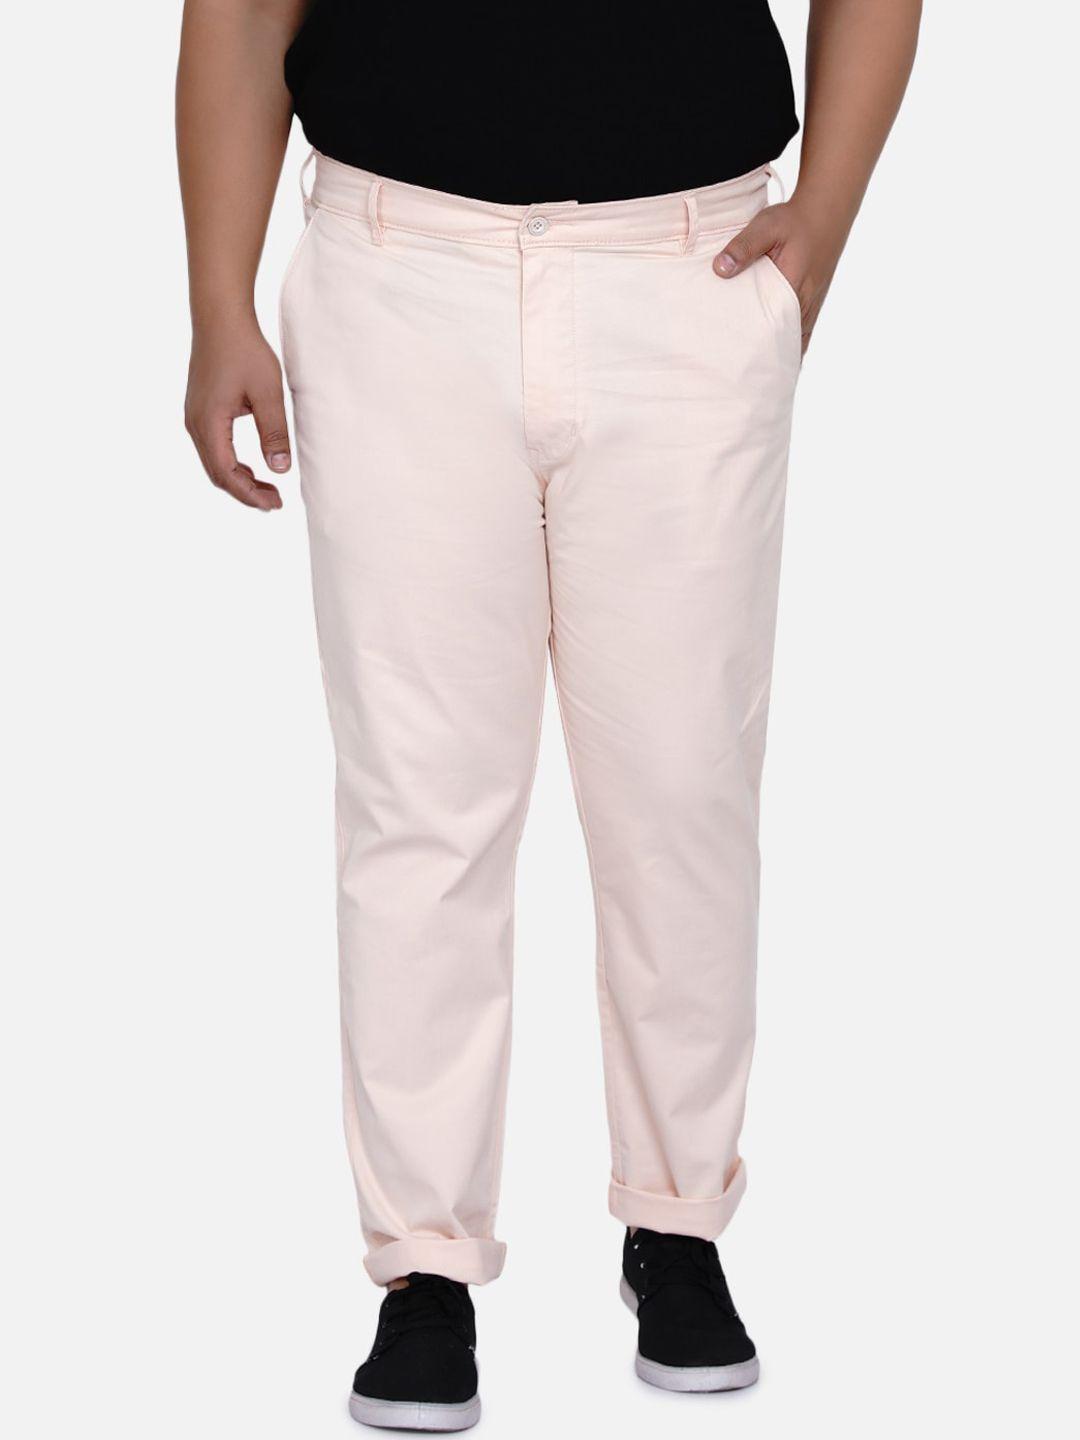 john pride men peach-coloured chinos trousers